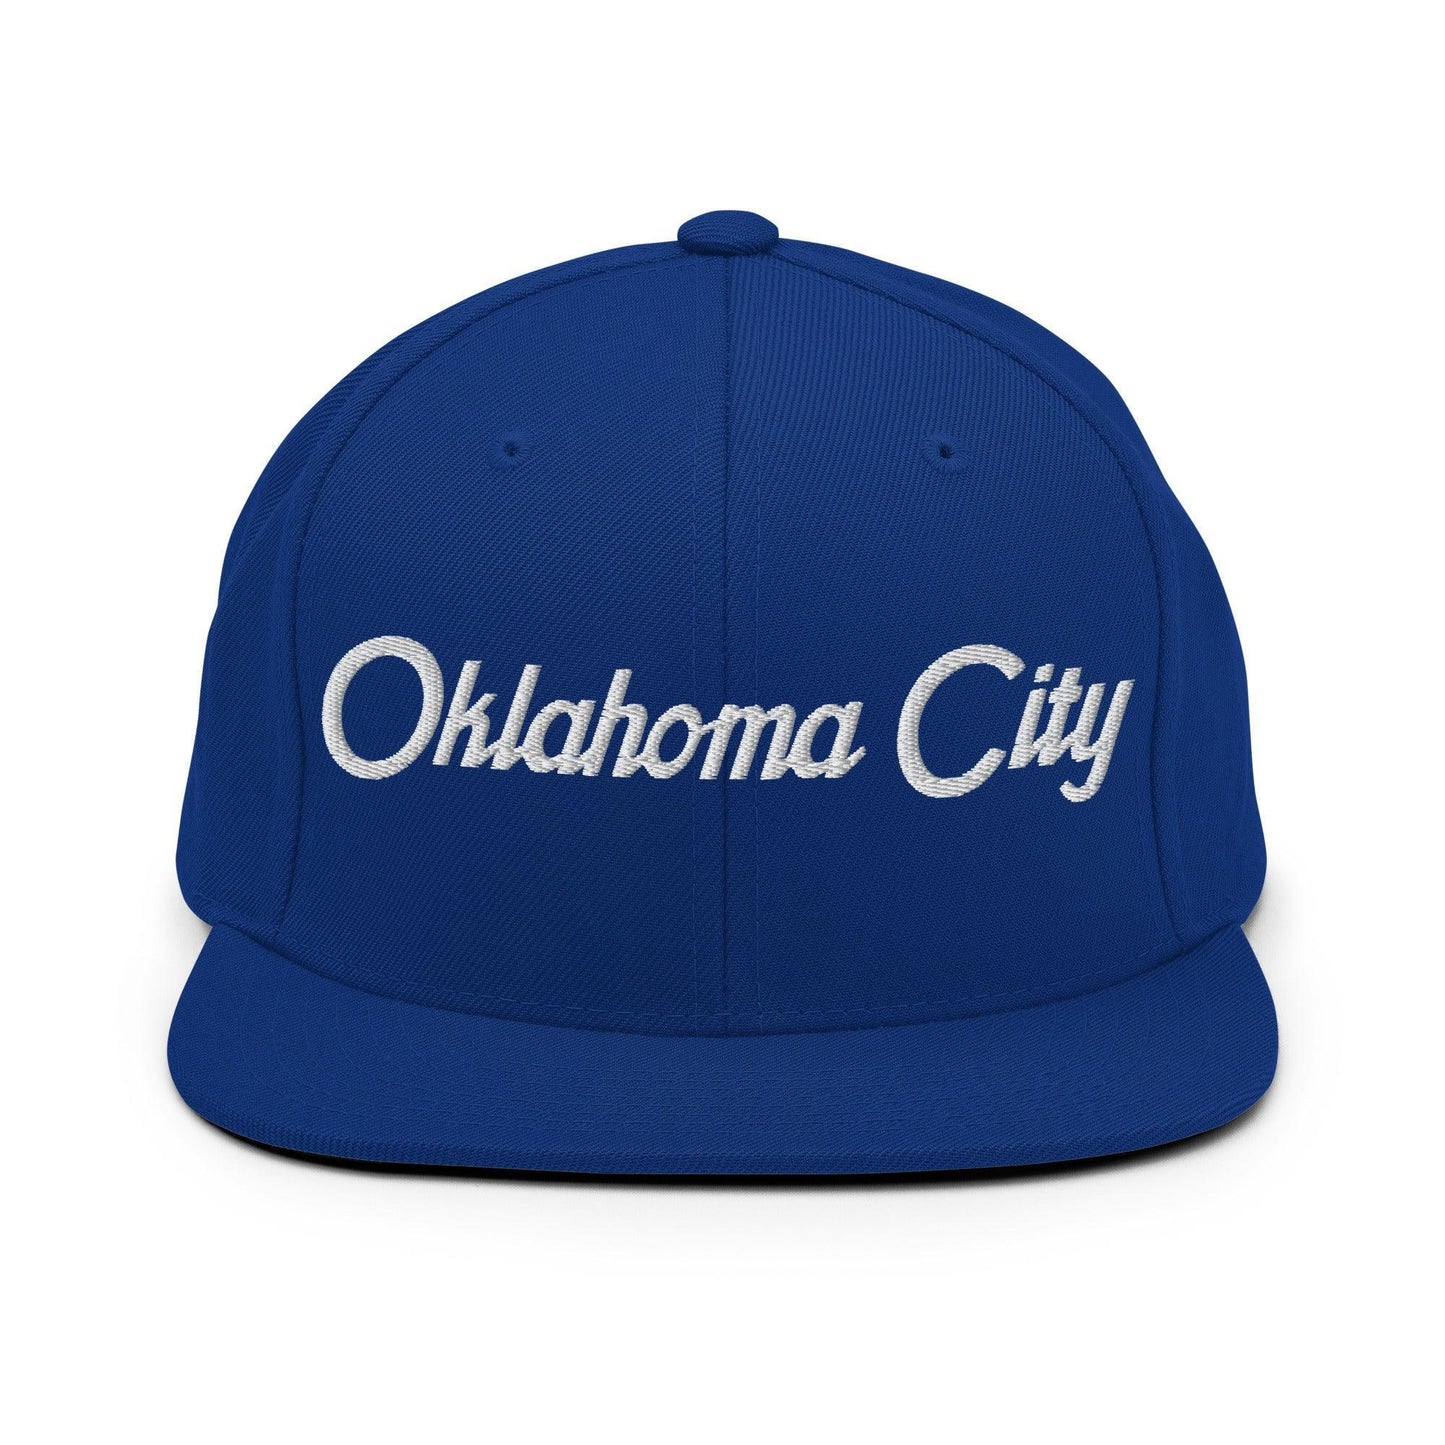 Oklahoma City Script Snapback Hat Royal Blue